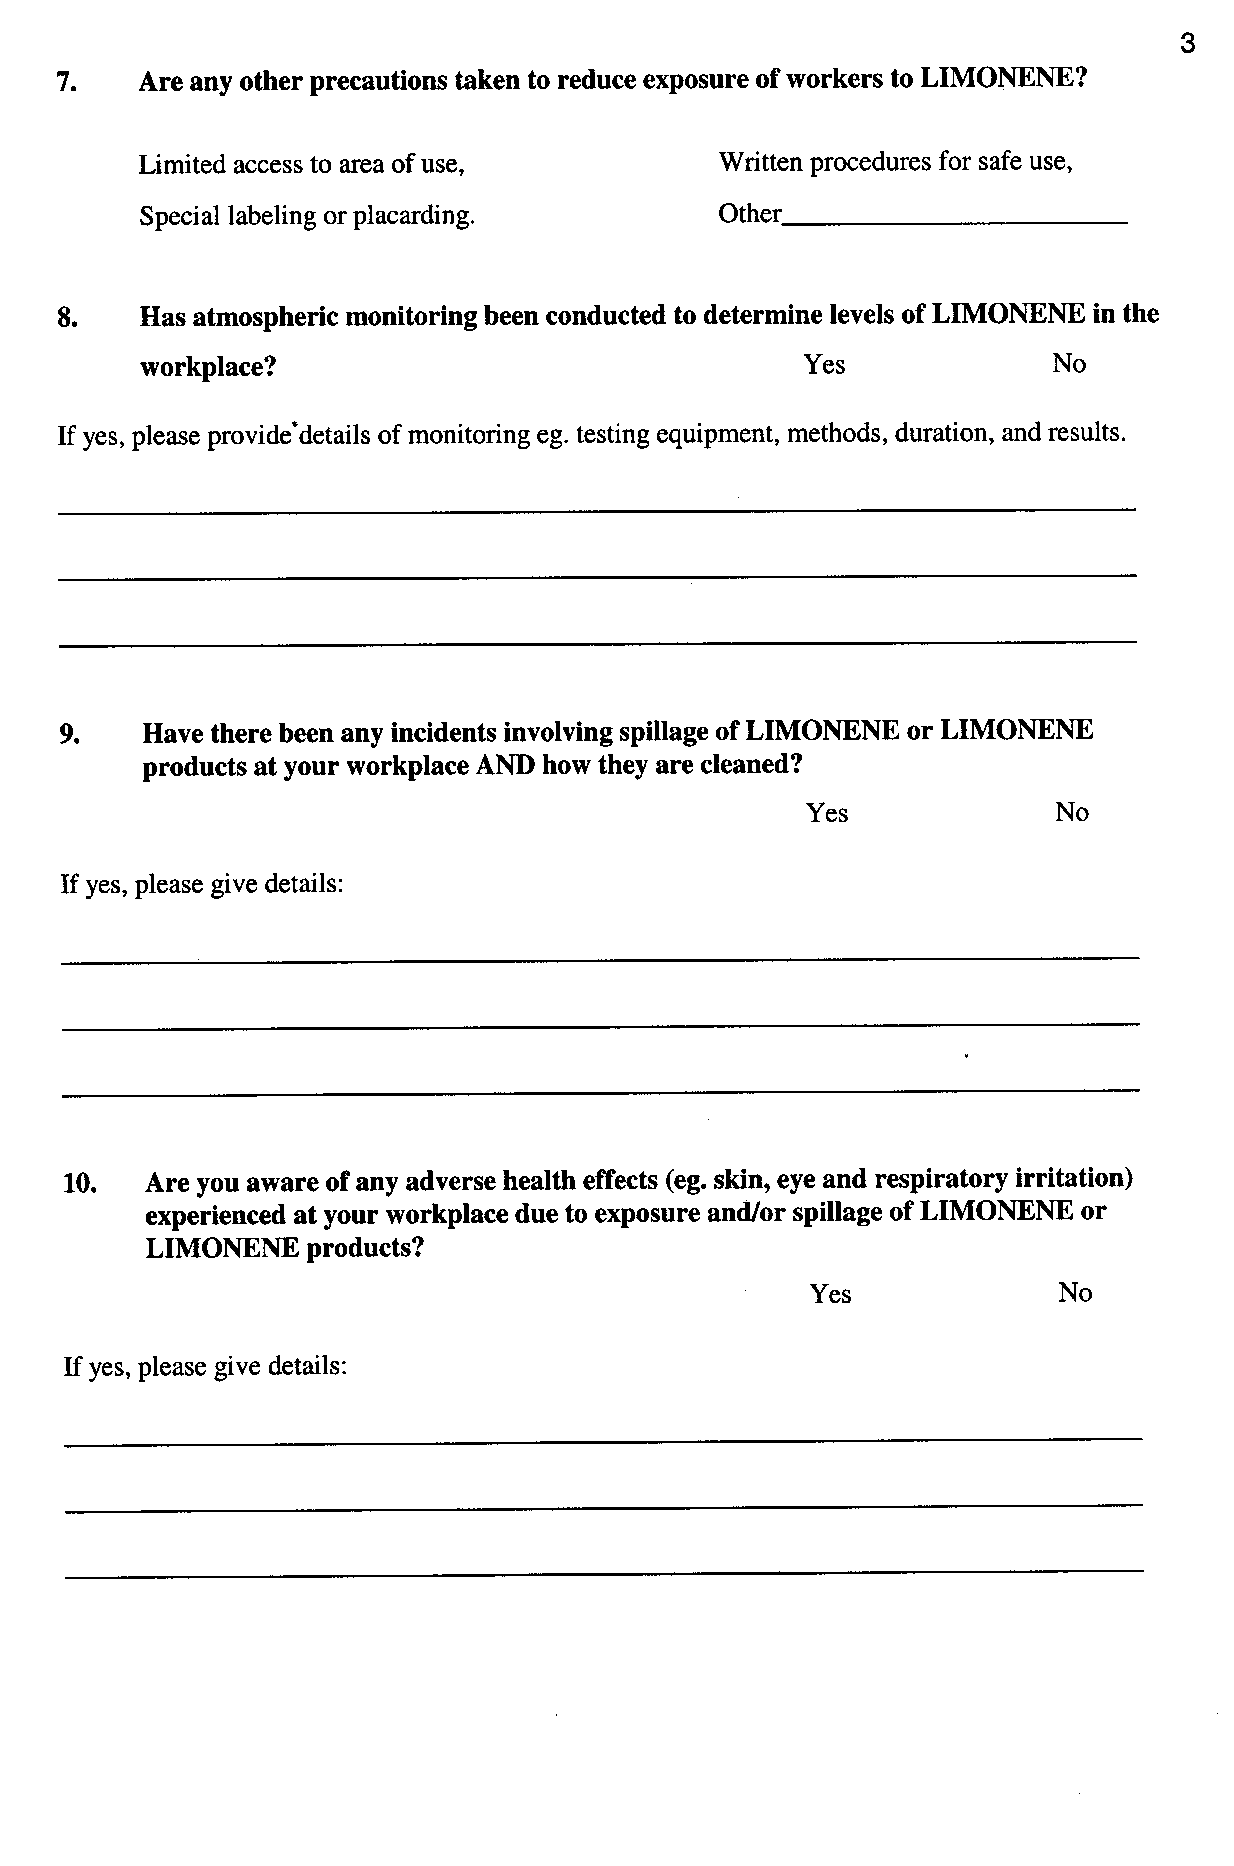 4th page survey